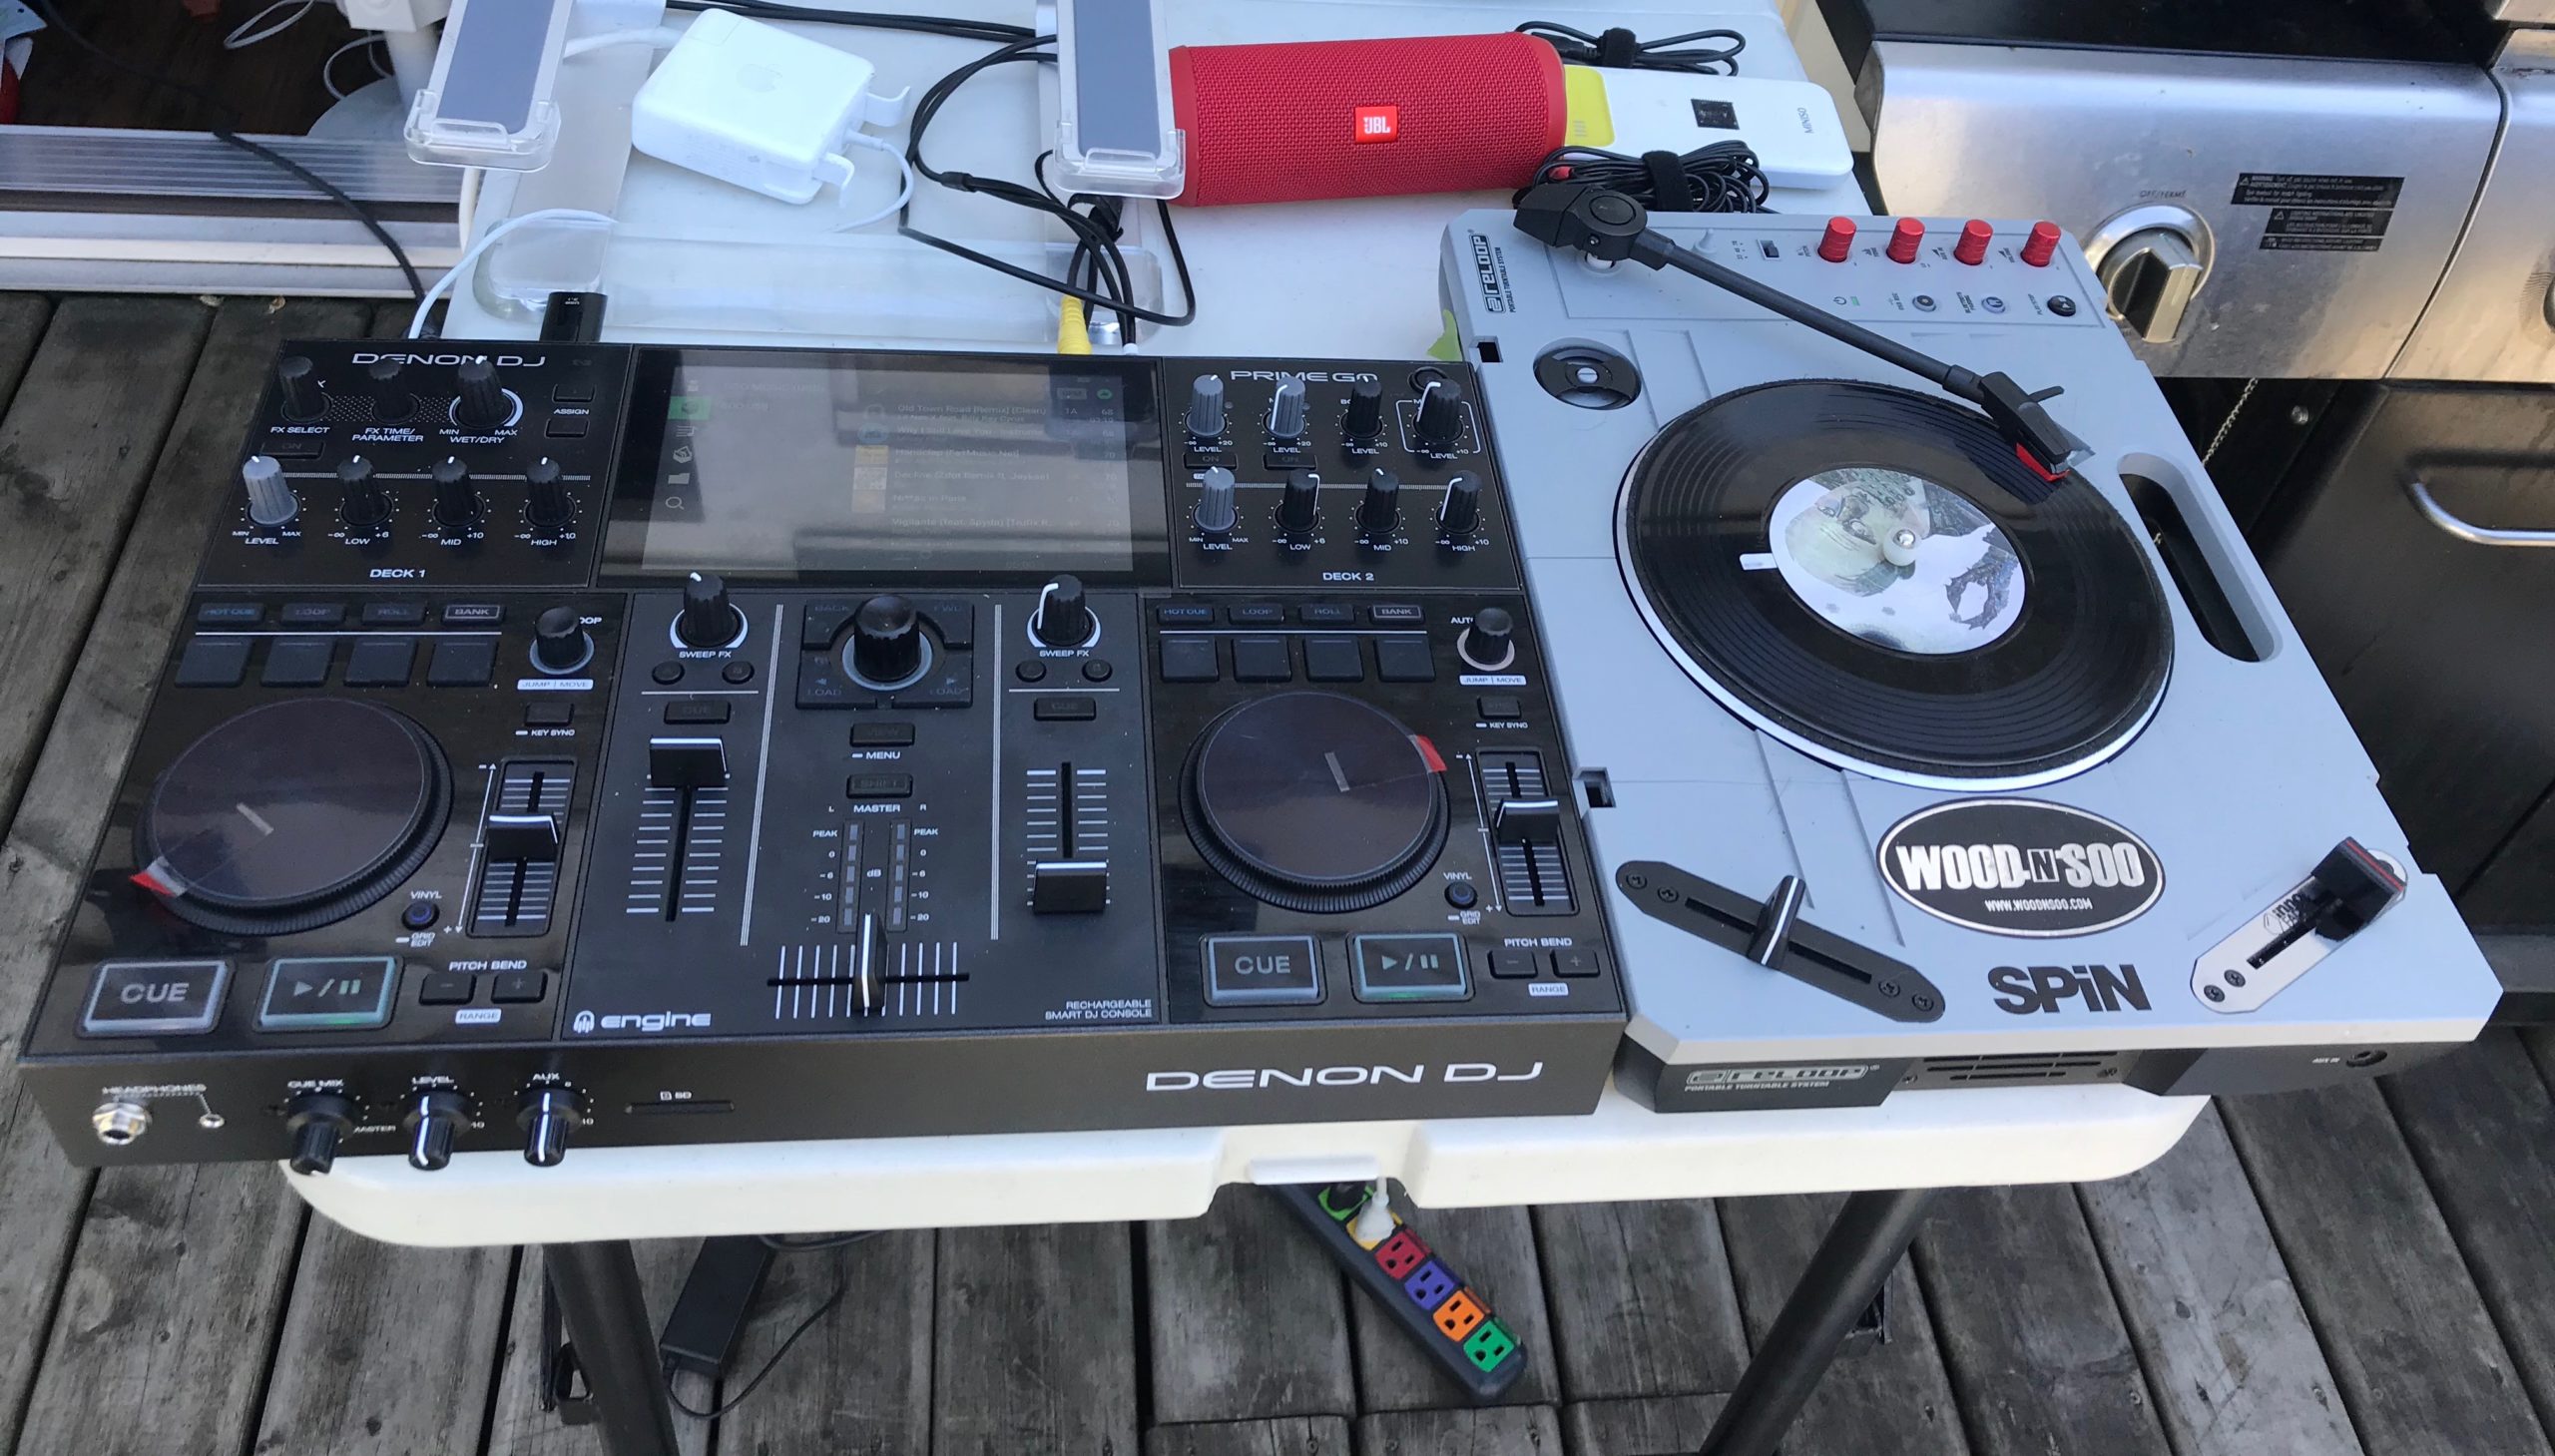 Review: Denon DJ's Prime GO lets you DJ pretty much anywhere - DJ 